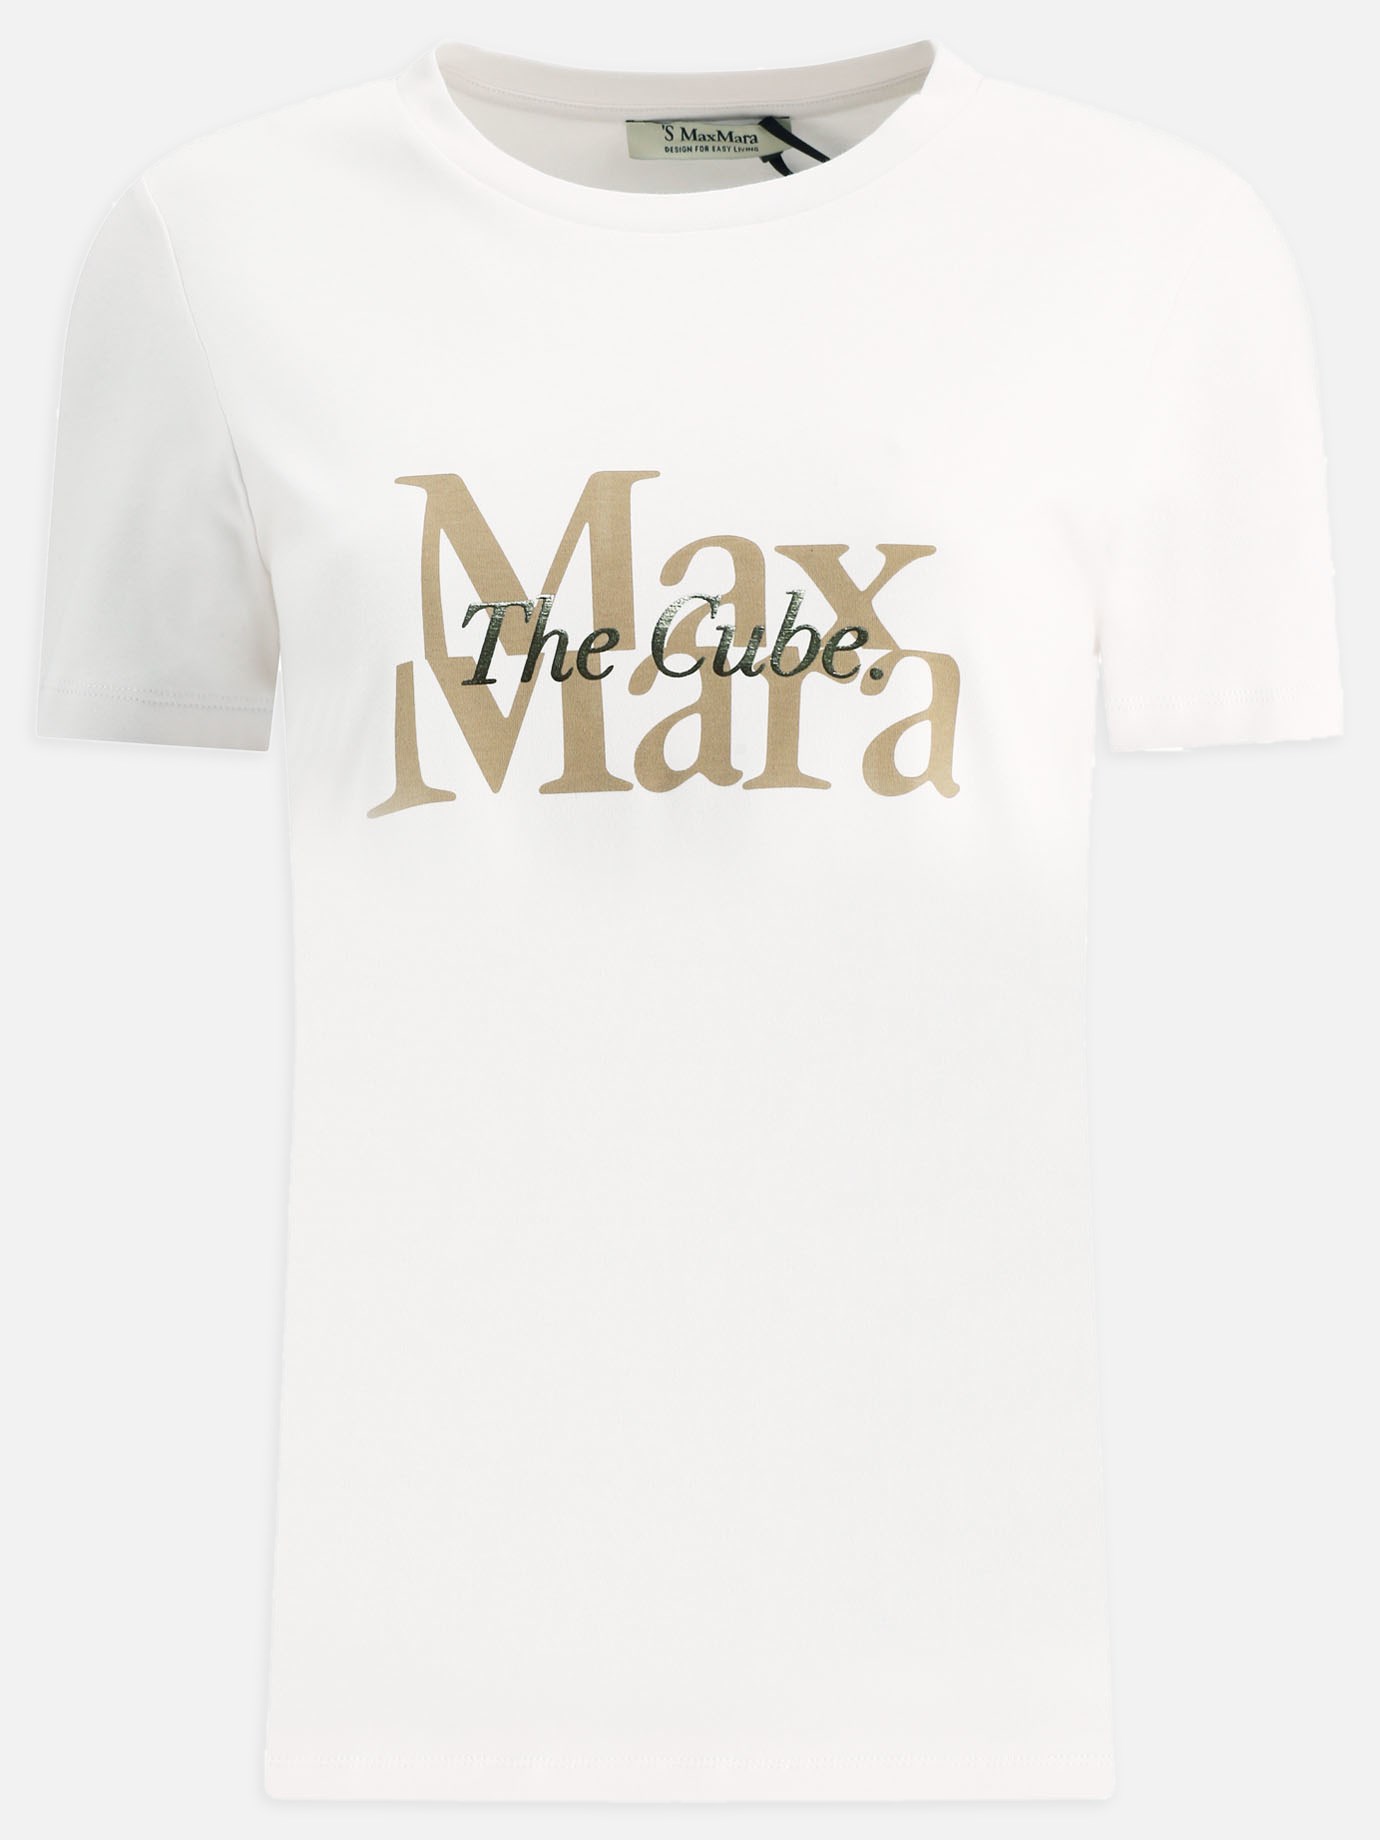 T-shirt  The Cube by Max Mara S - 2